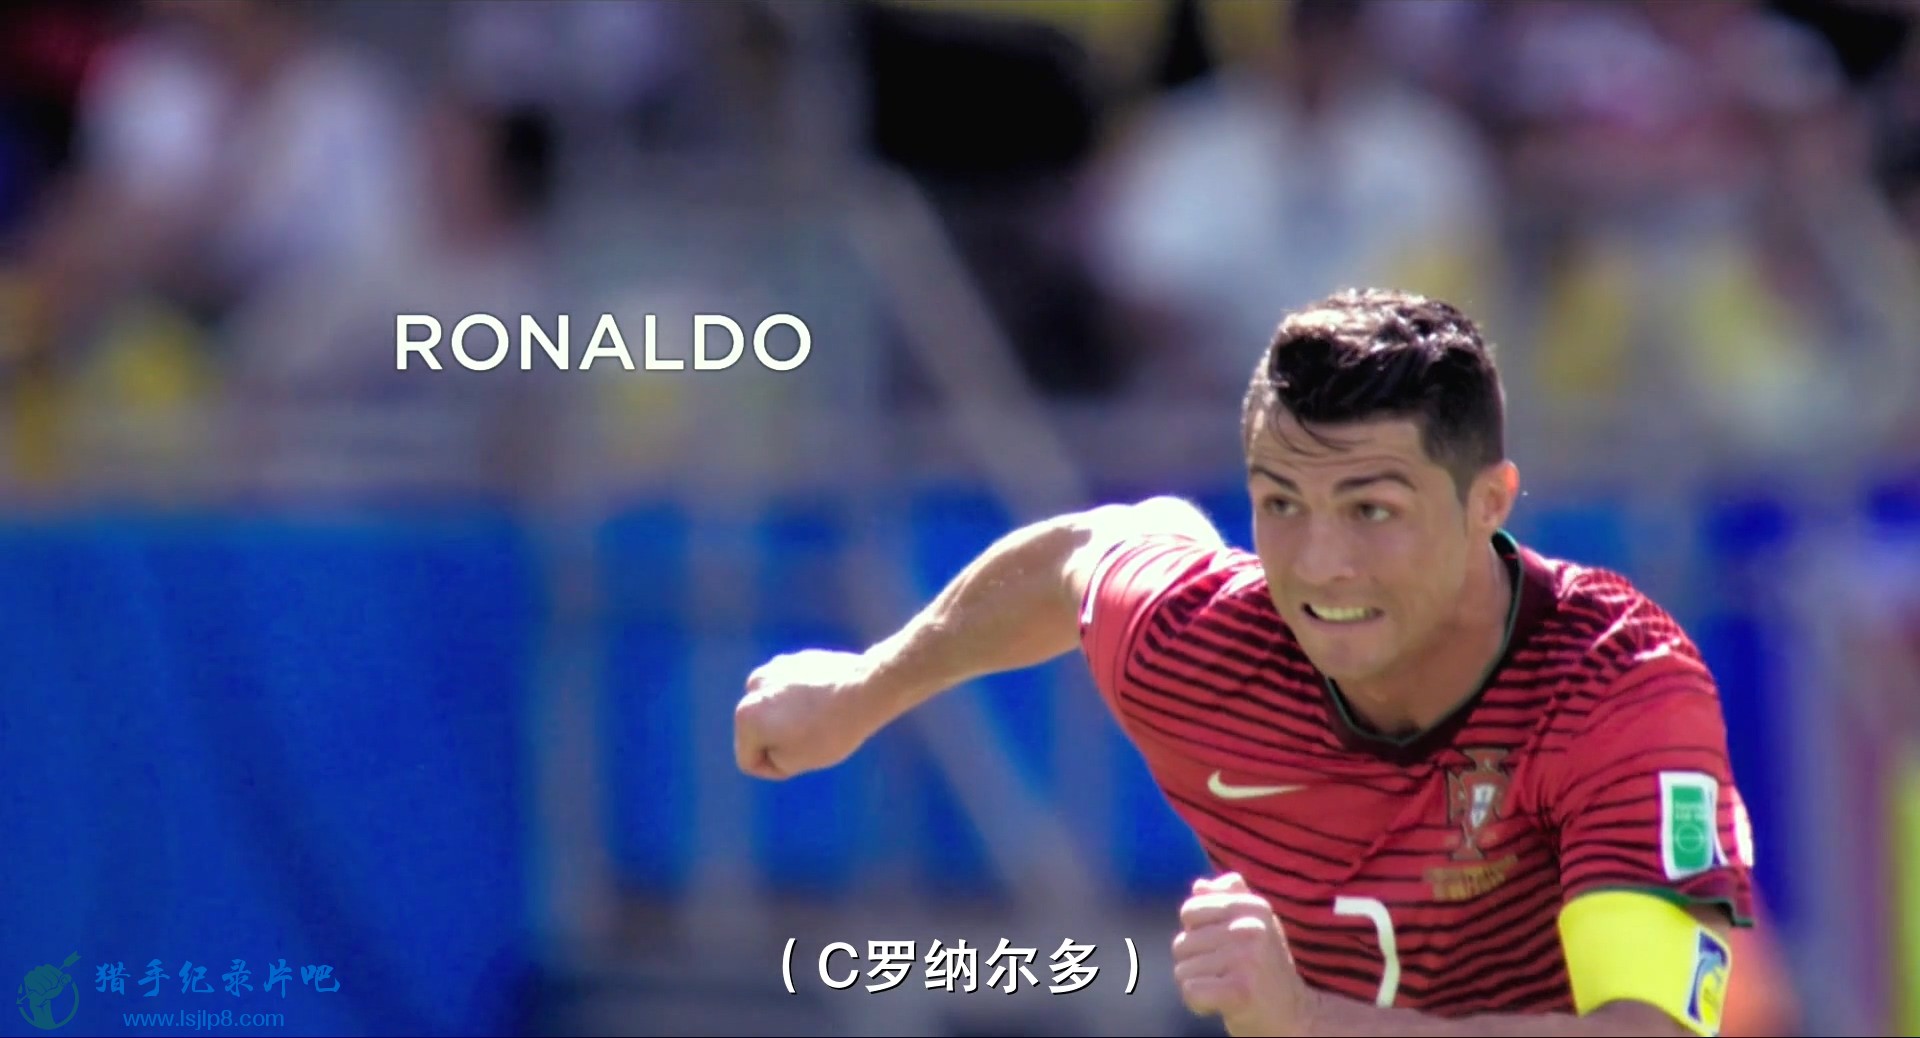 C.ԭ.Ronaldo.2015.BD1080P.X264.AAC.Spanish.CHS.Mp4Ba.mp4_20200304_105901.285.jpg